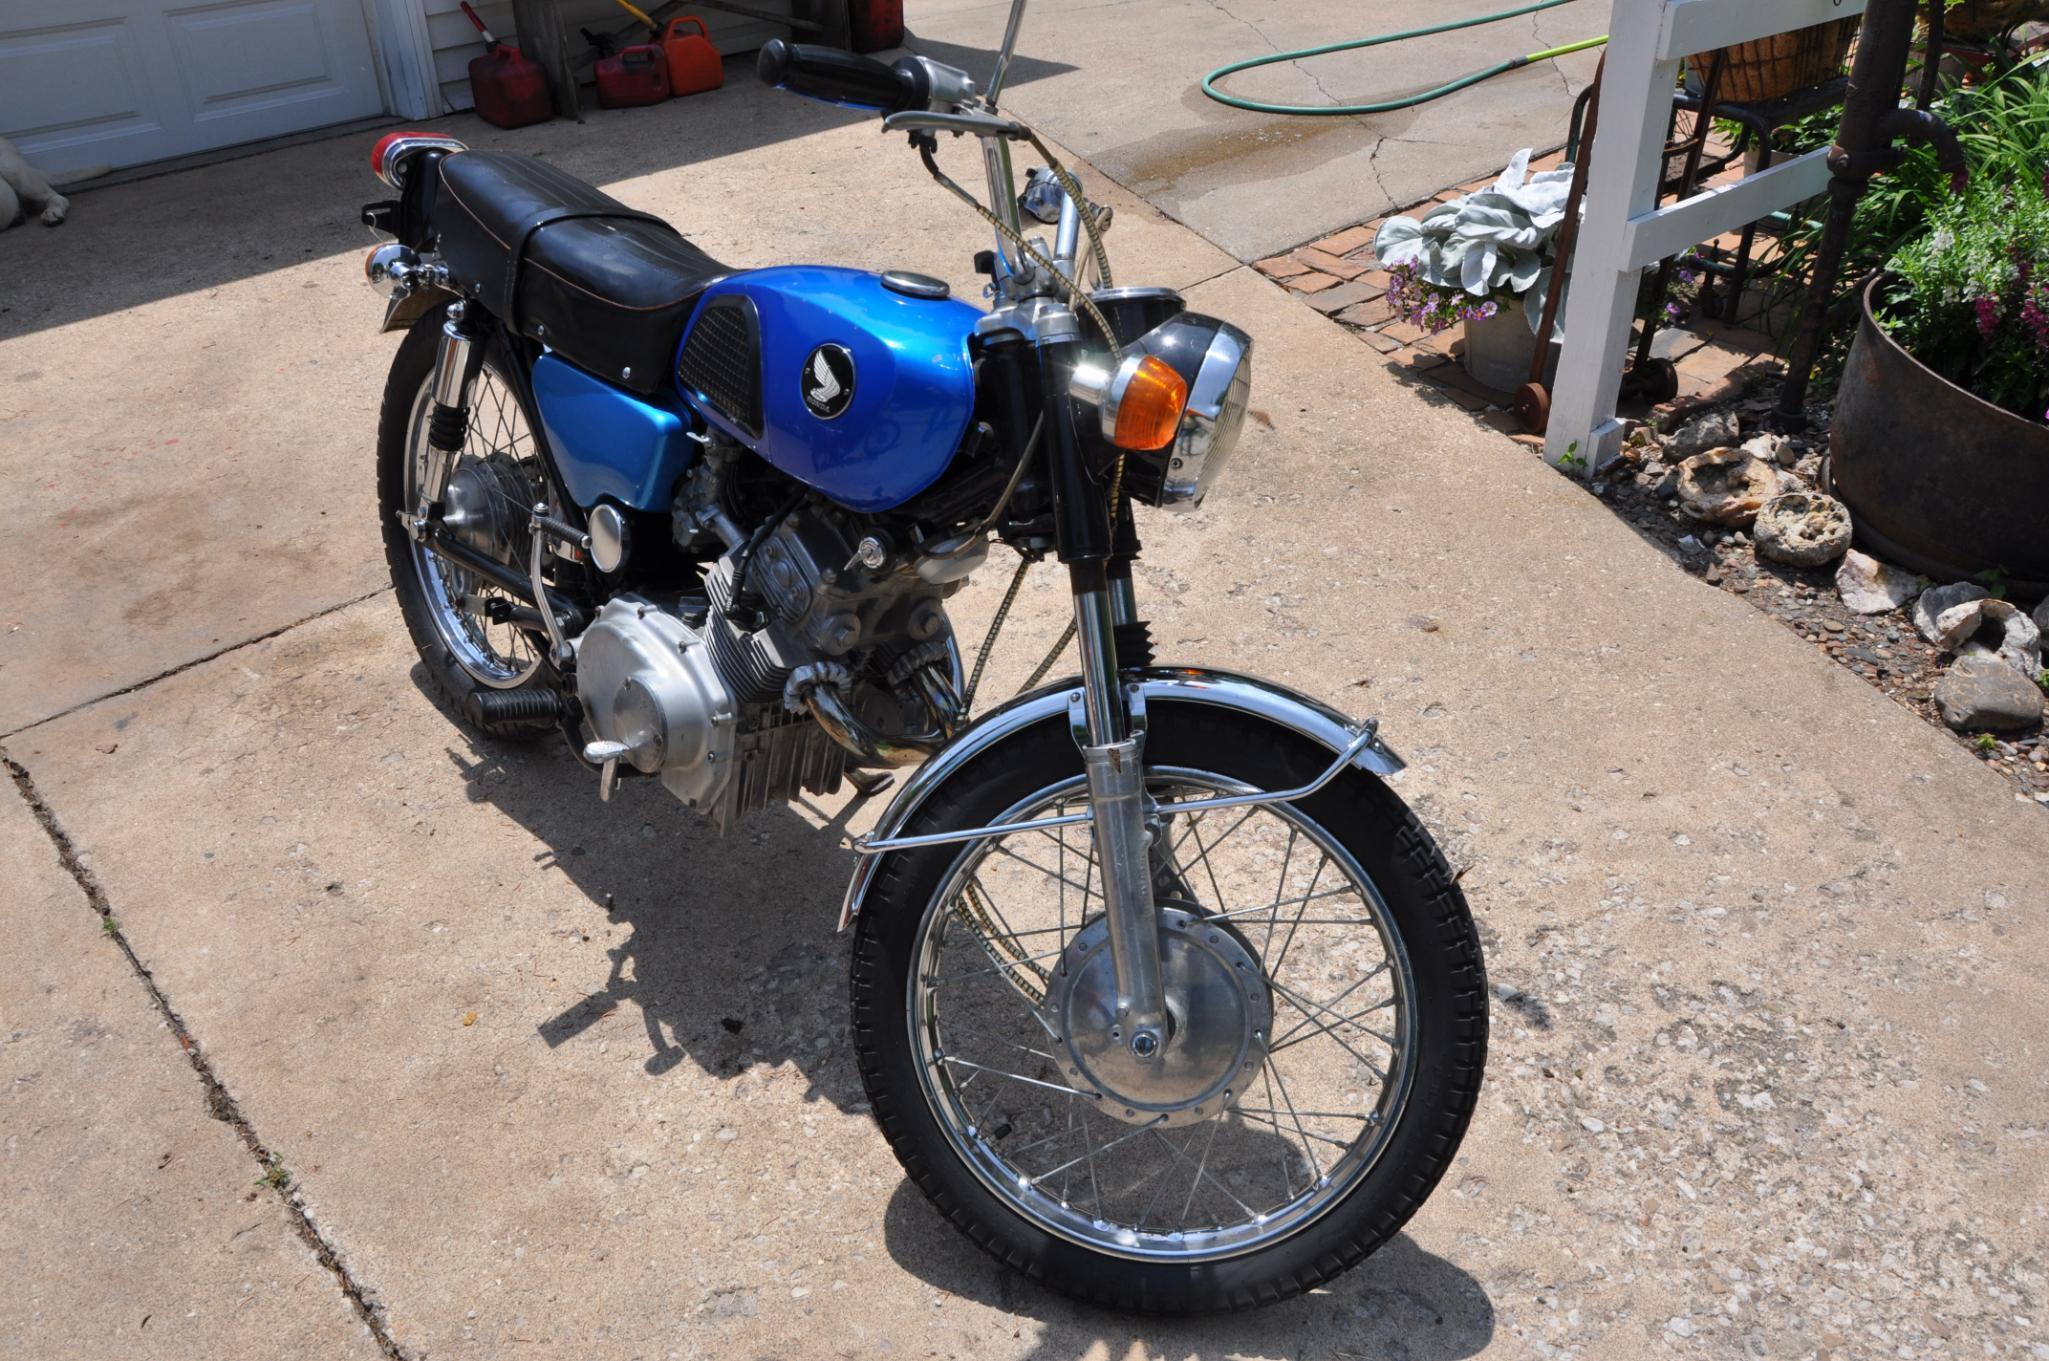 1968 Honda 175cc motorcycle